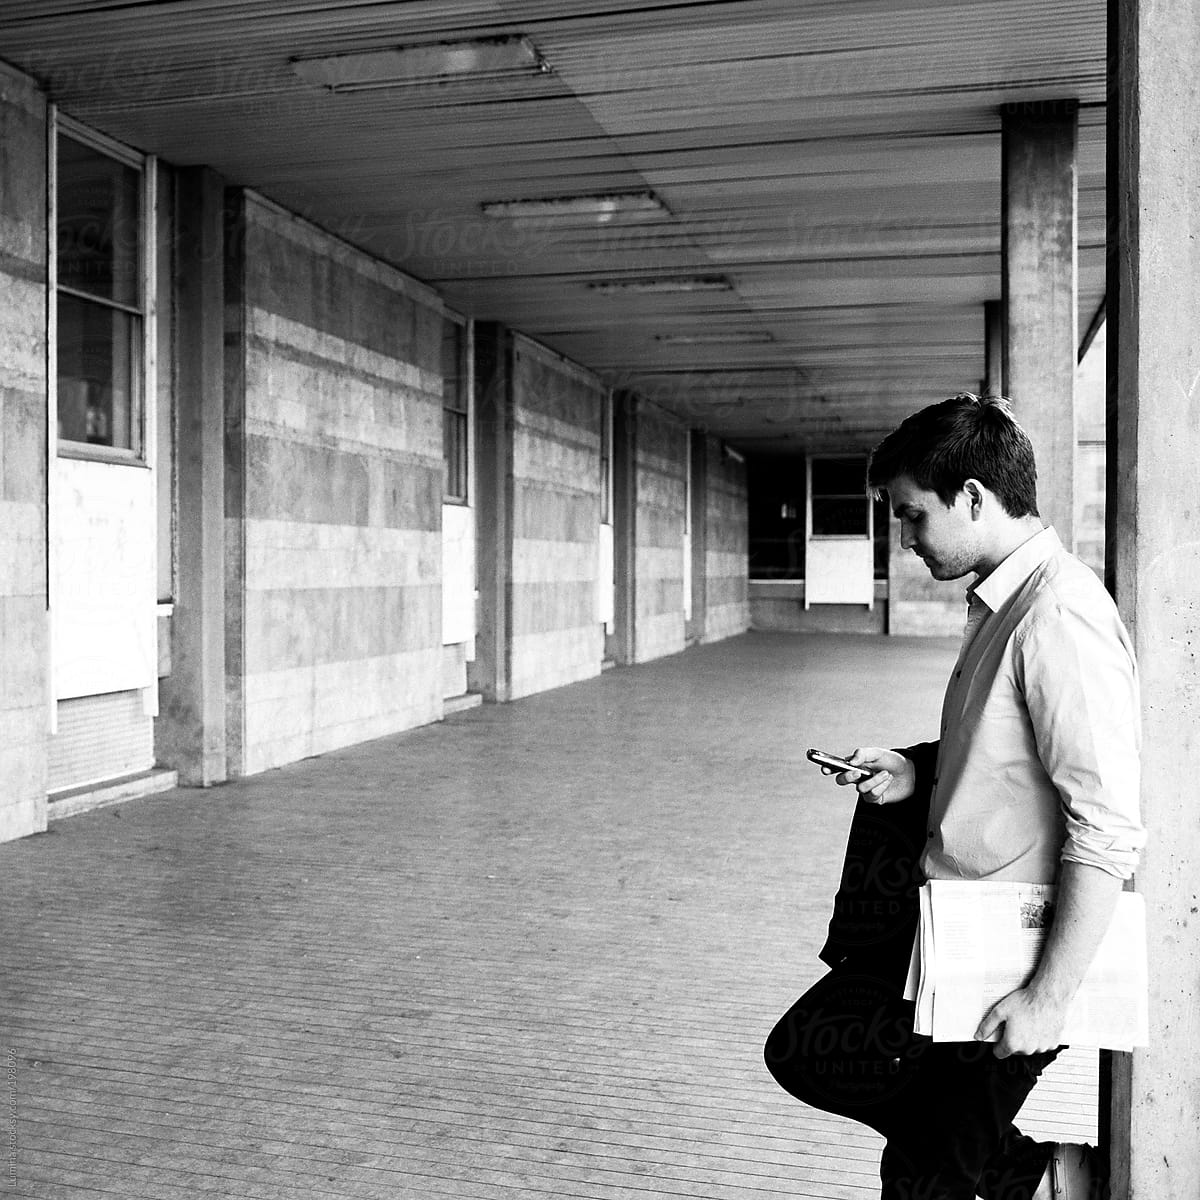 Man Texting on the Street